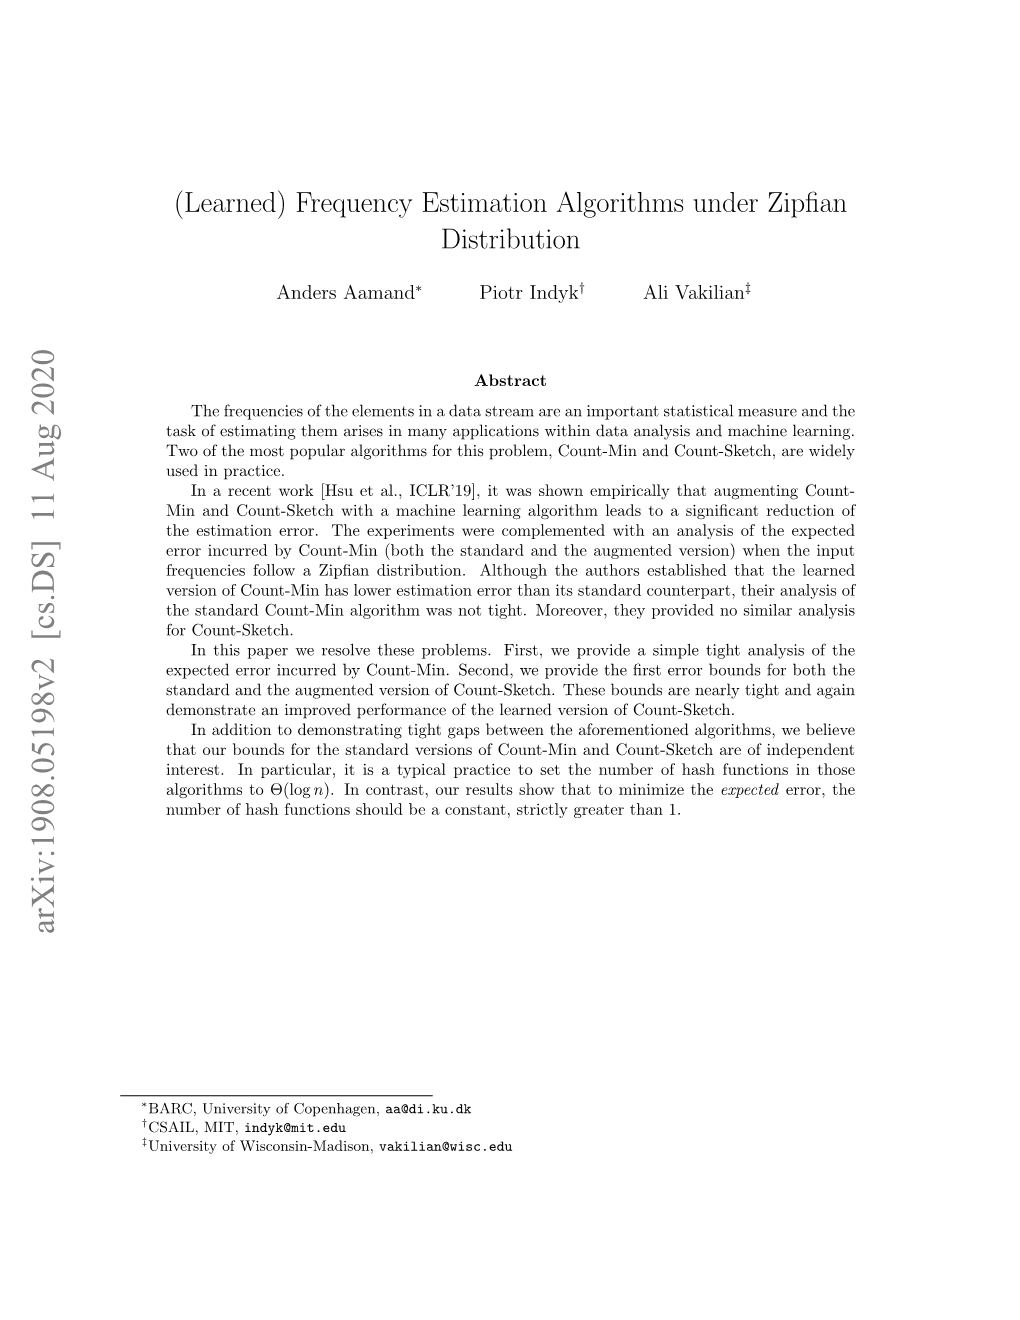 (Learned) Frequency Estimation Algorithms Under Zipfian Distribution